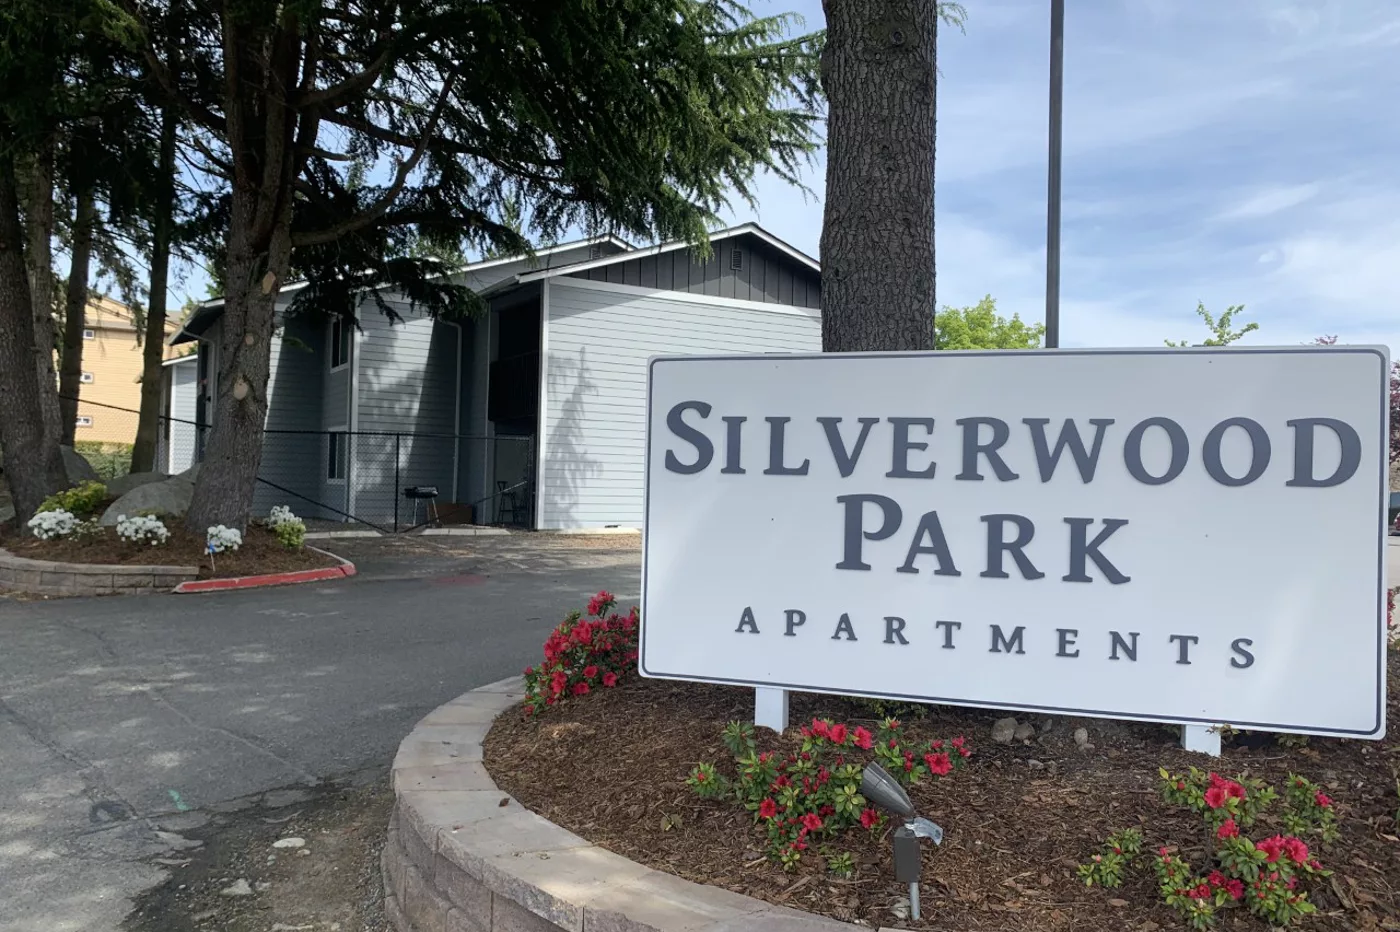 Silverwood Park